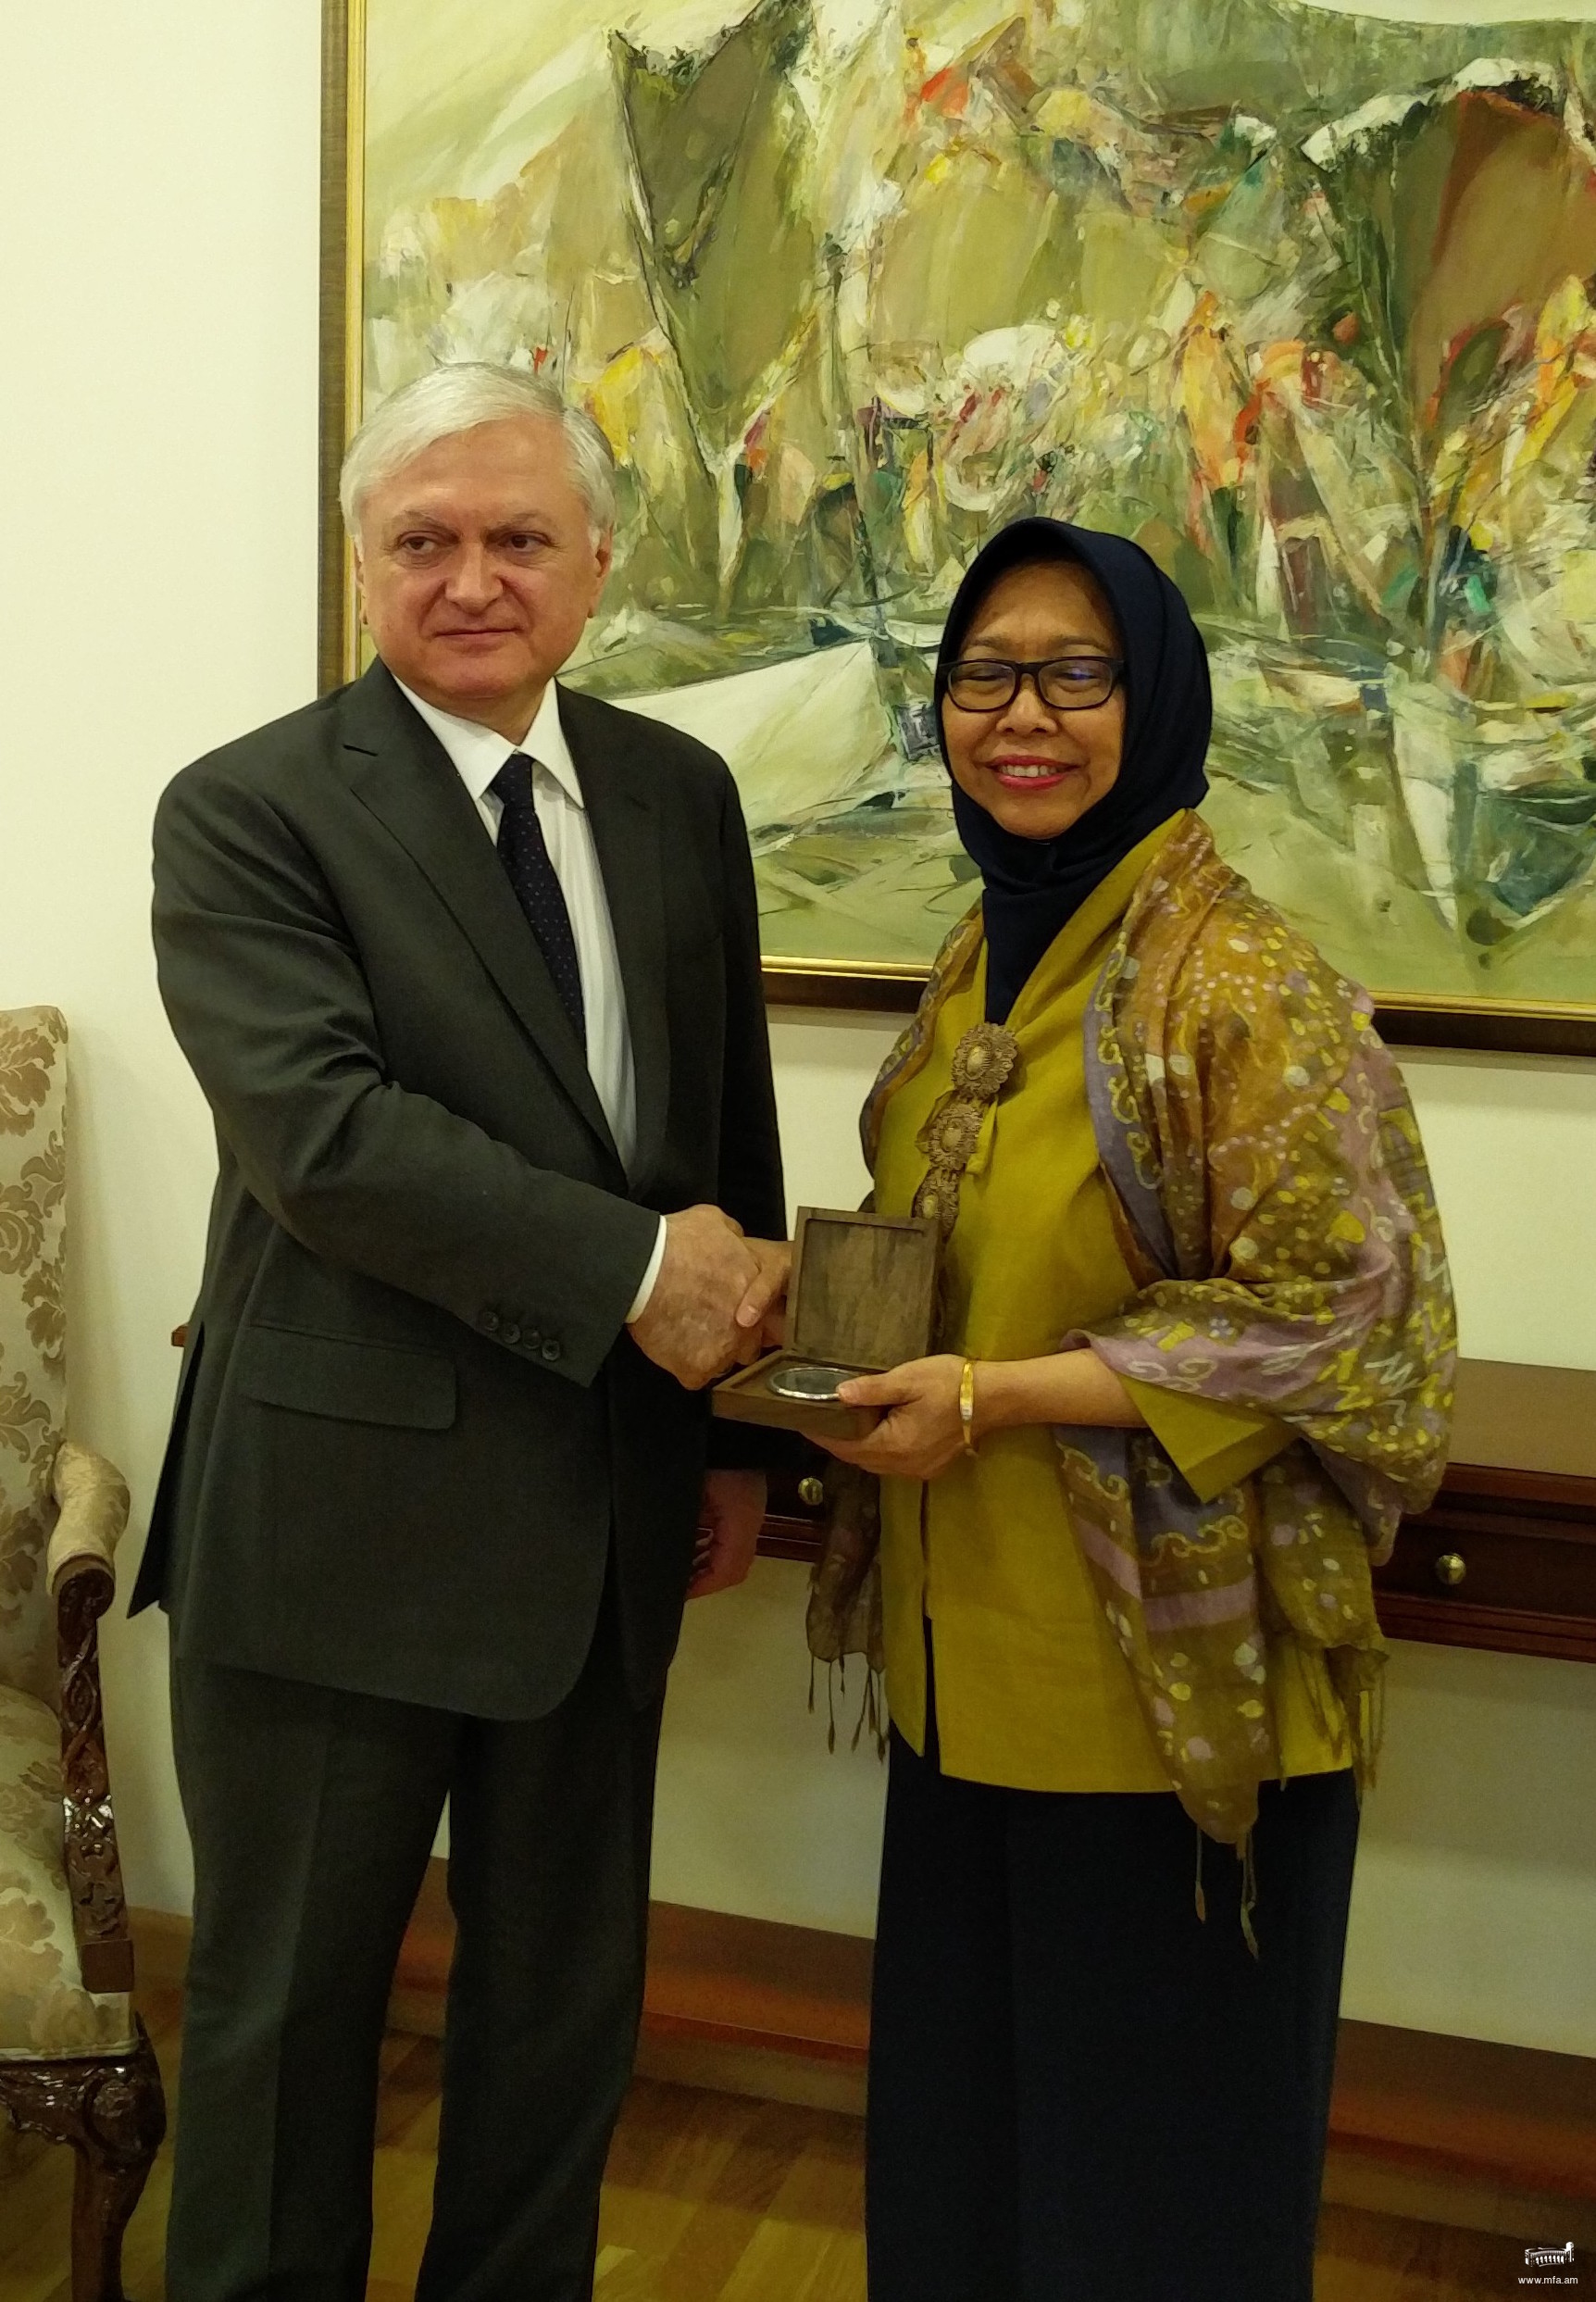 Foreign Minister of Armenia received Ambassador of Indonesia